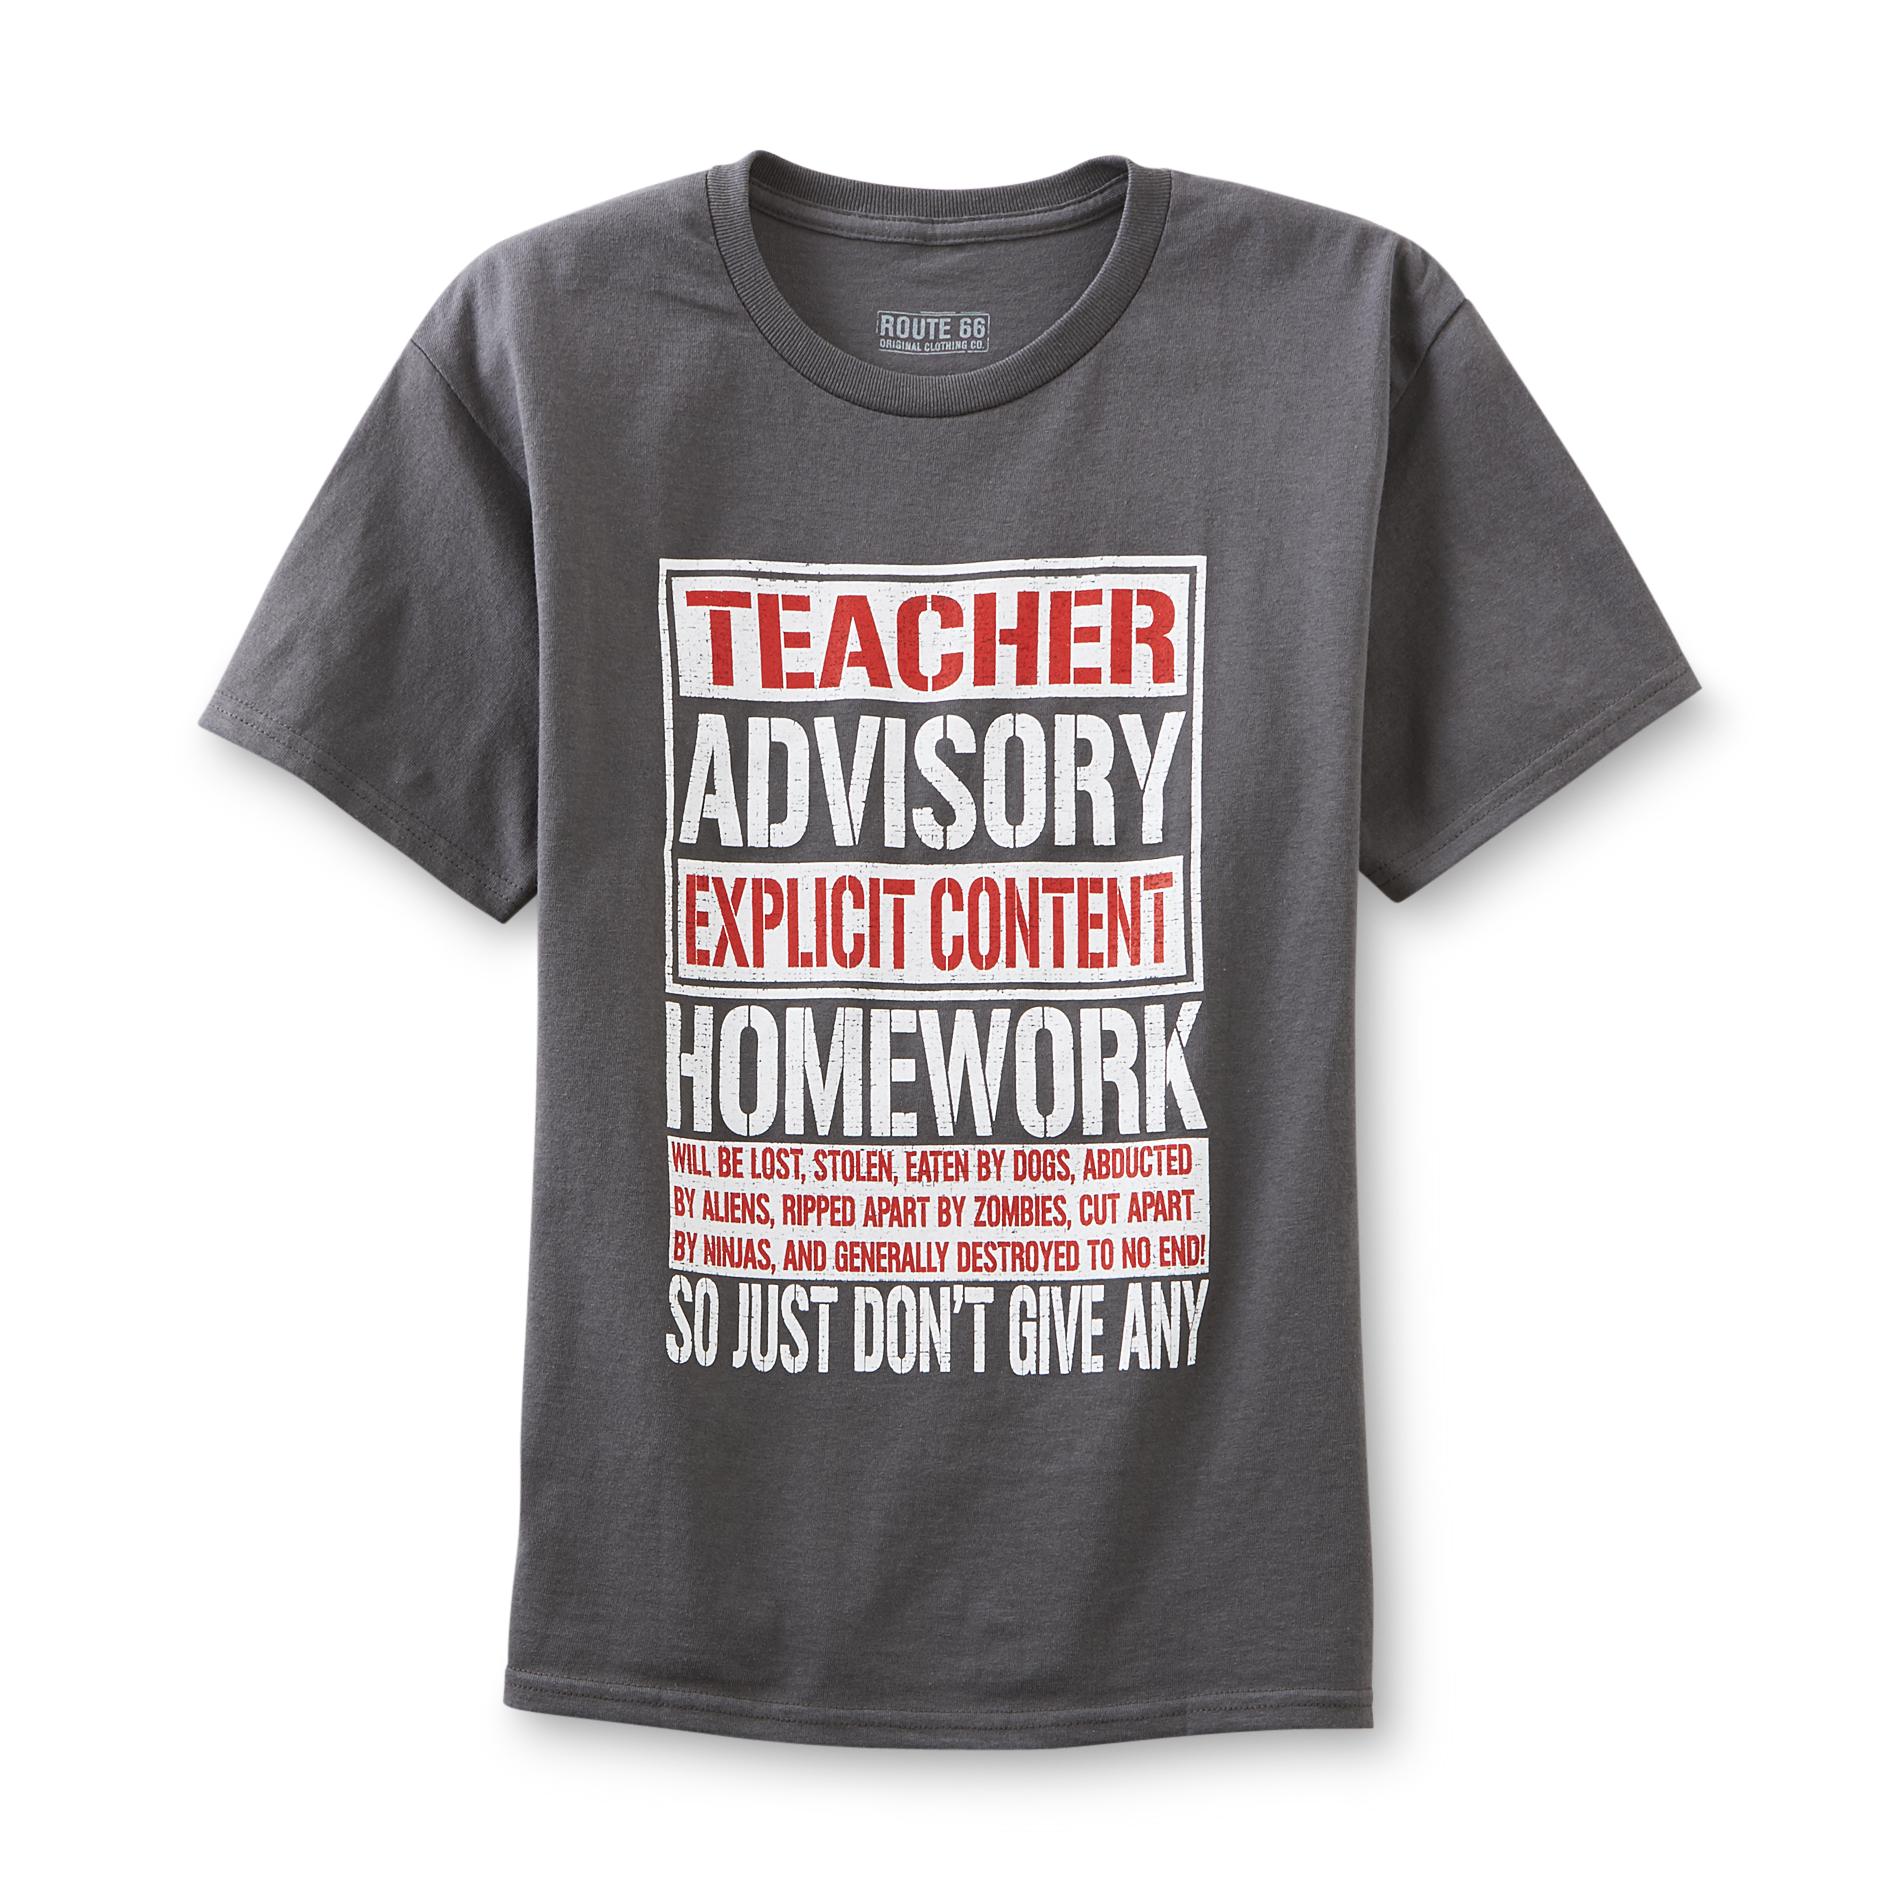 Route 66 Boy's Graphic T-Shirt - Teacher Advisory